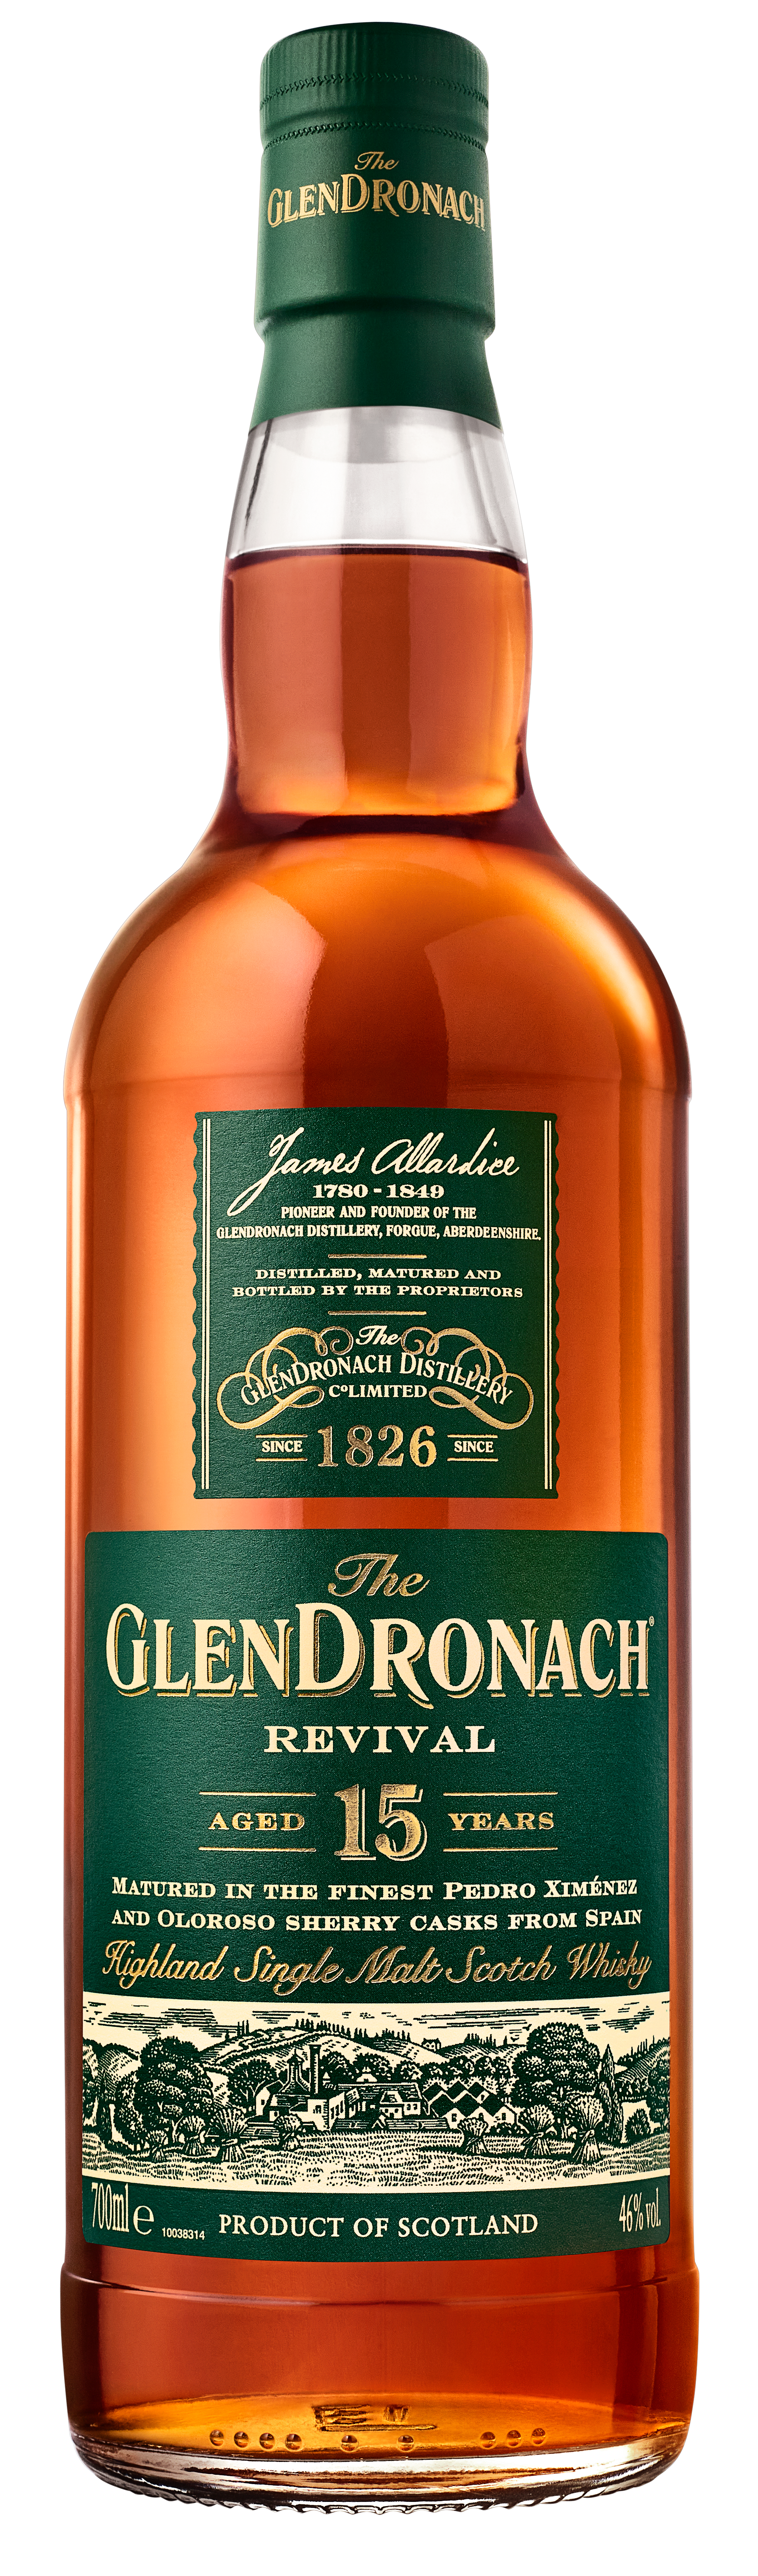 The GlenDronach Revival bottle